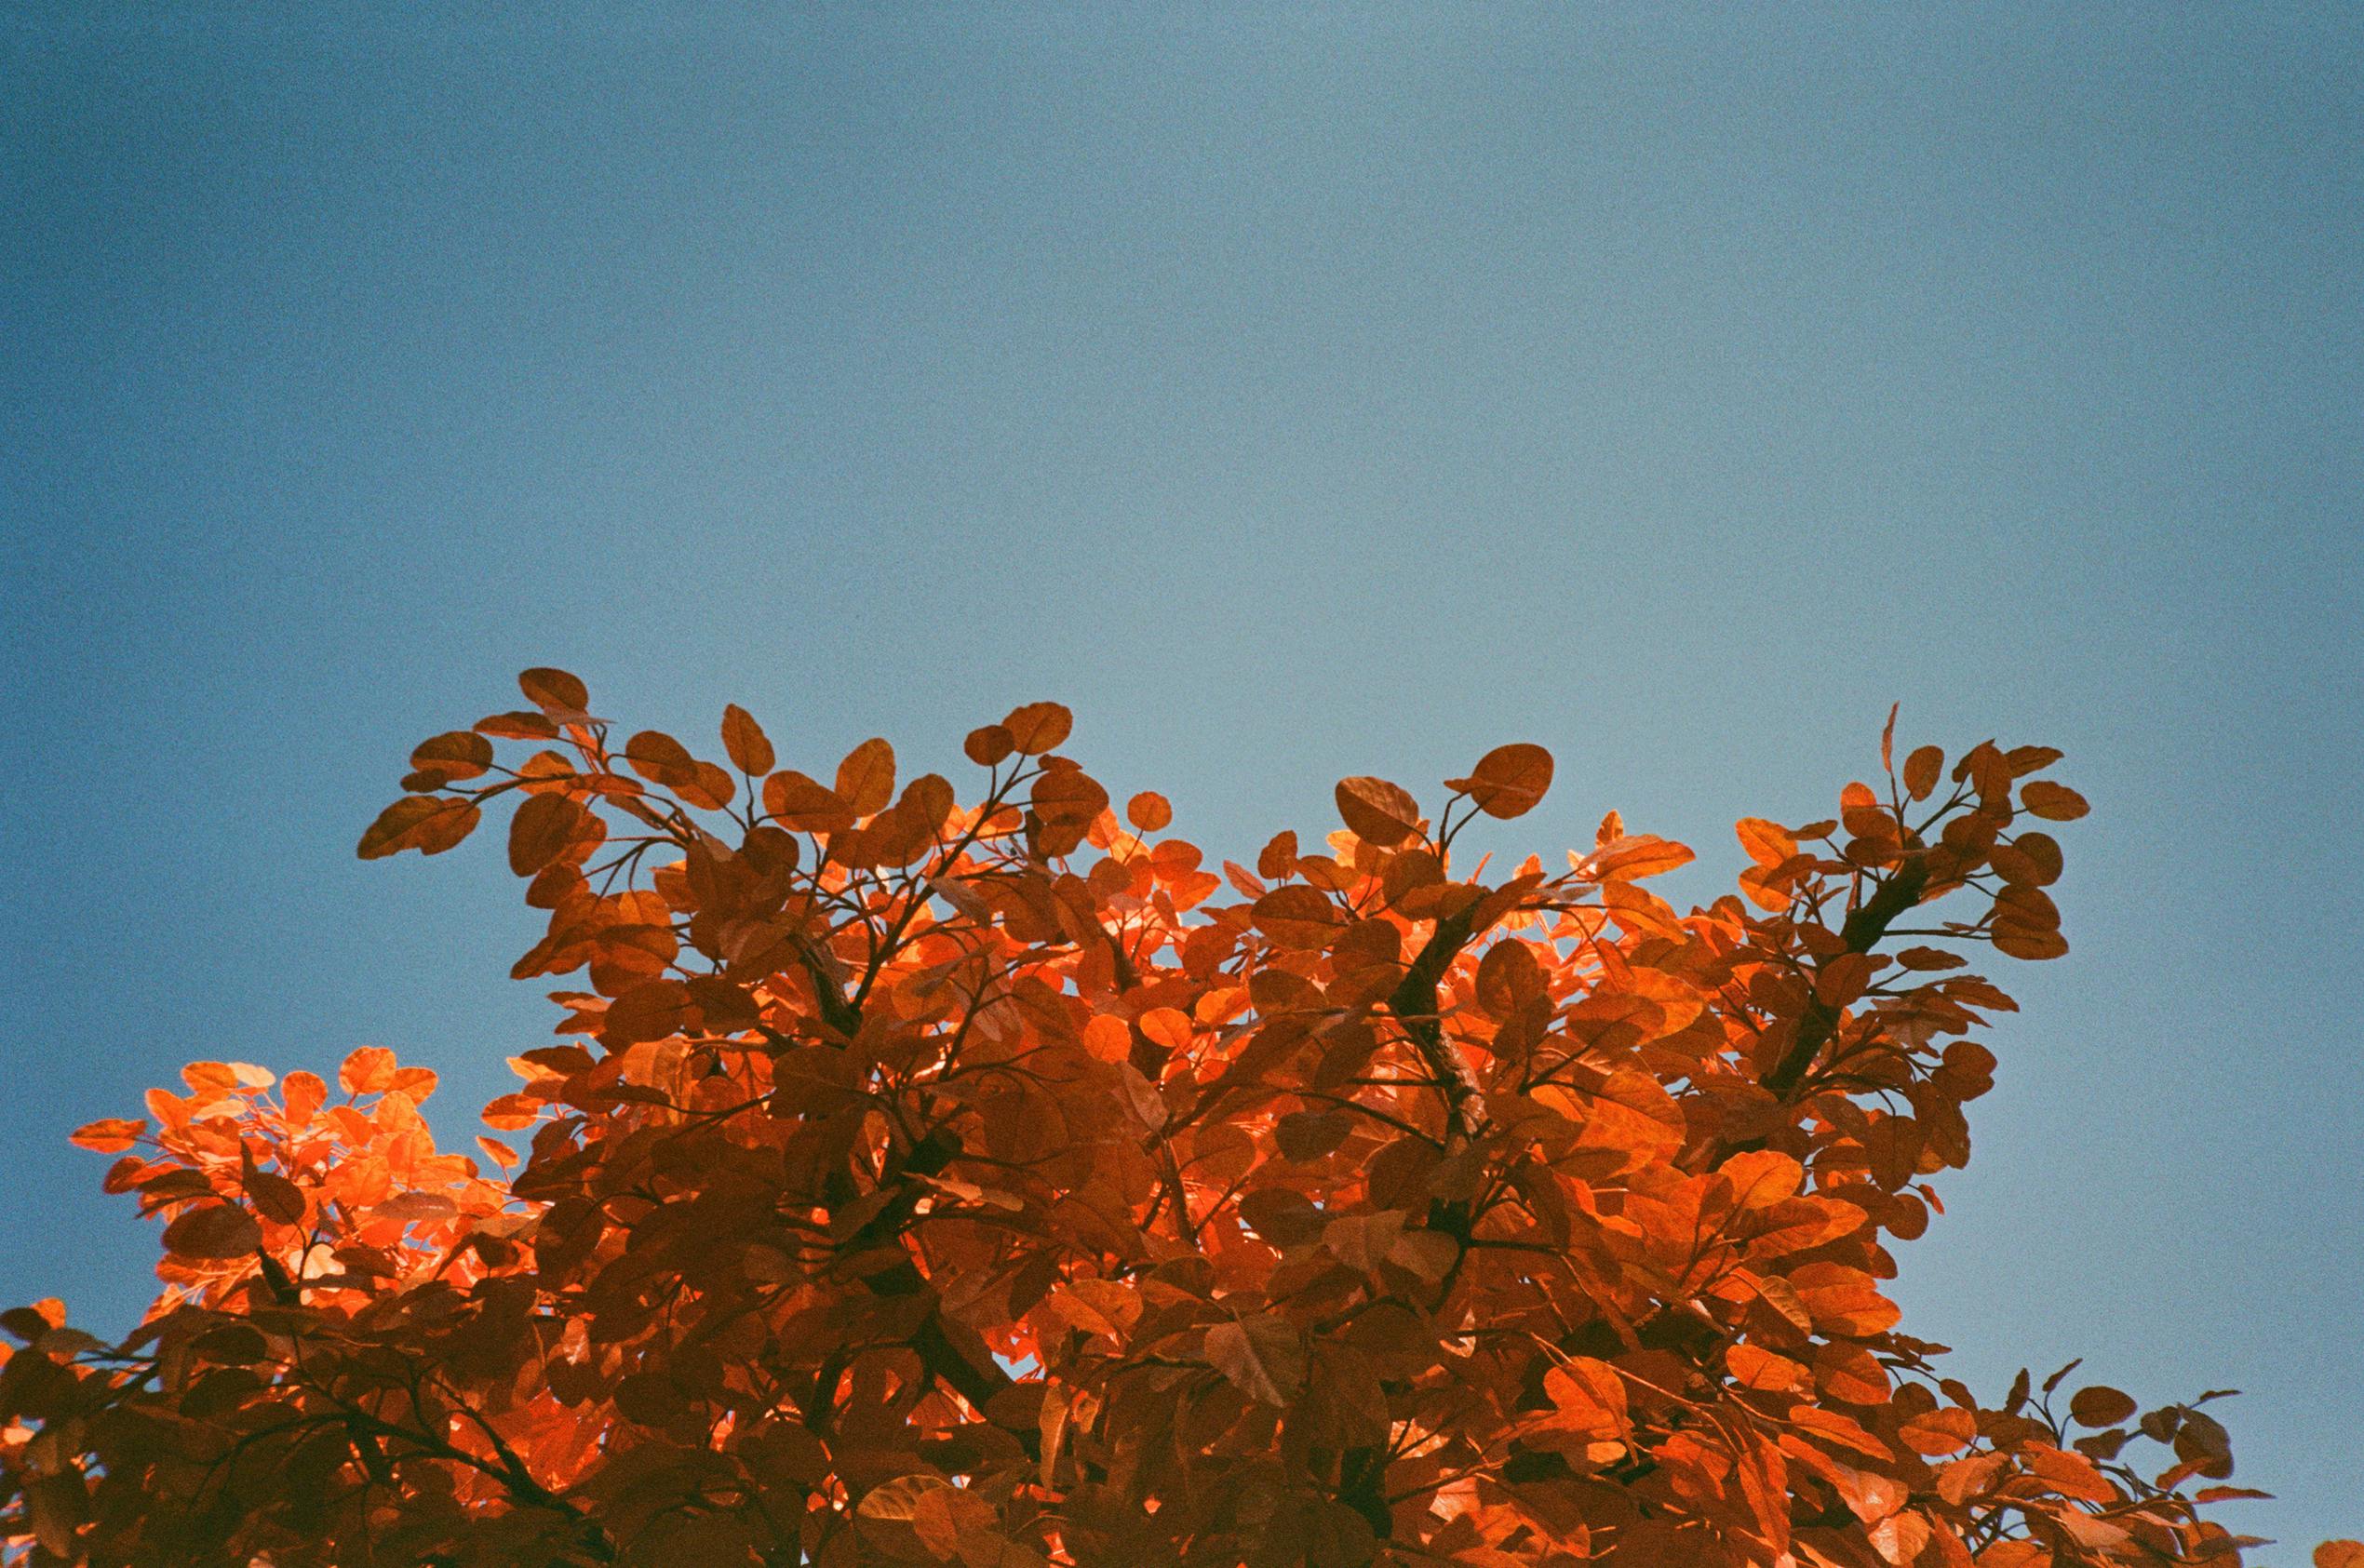 /_next/static/media/autumn-orange-leaves.885e8f4d.jpg